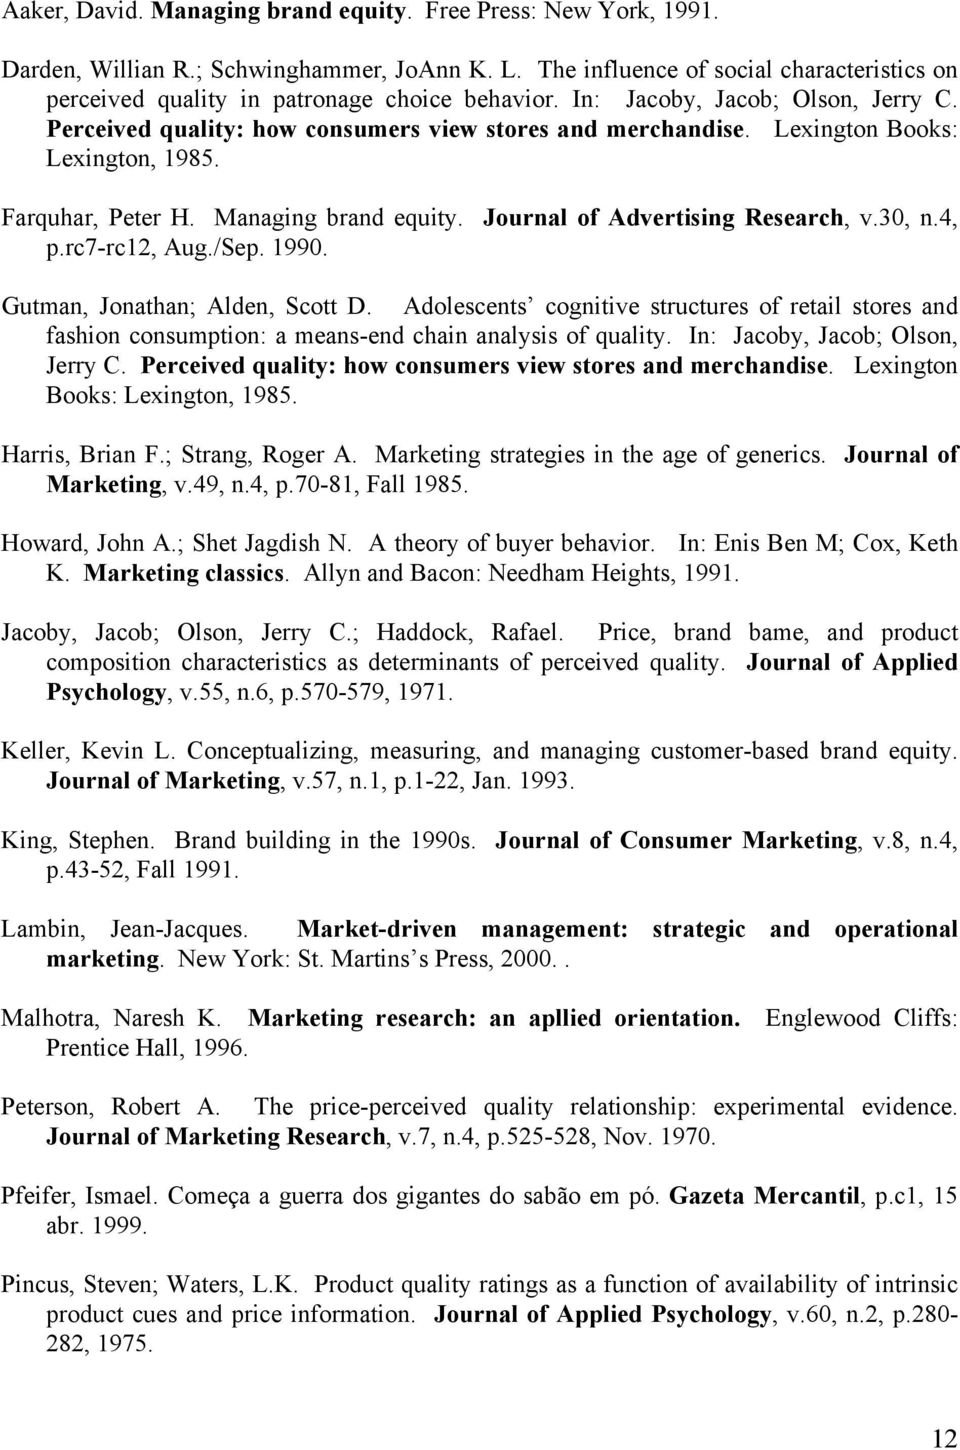 Lexington Books: Lexington, 1985. Farquhar, Peter H. Managing brand equity. Journal of Advertising Research, v.30, n.4, p.rc7-rc12, Aug./Sep. 1990. Gutman, Jonathan; Alden, Scott D.